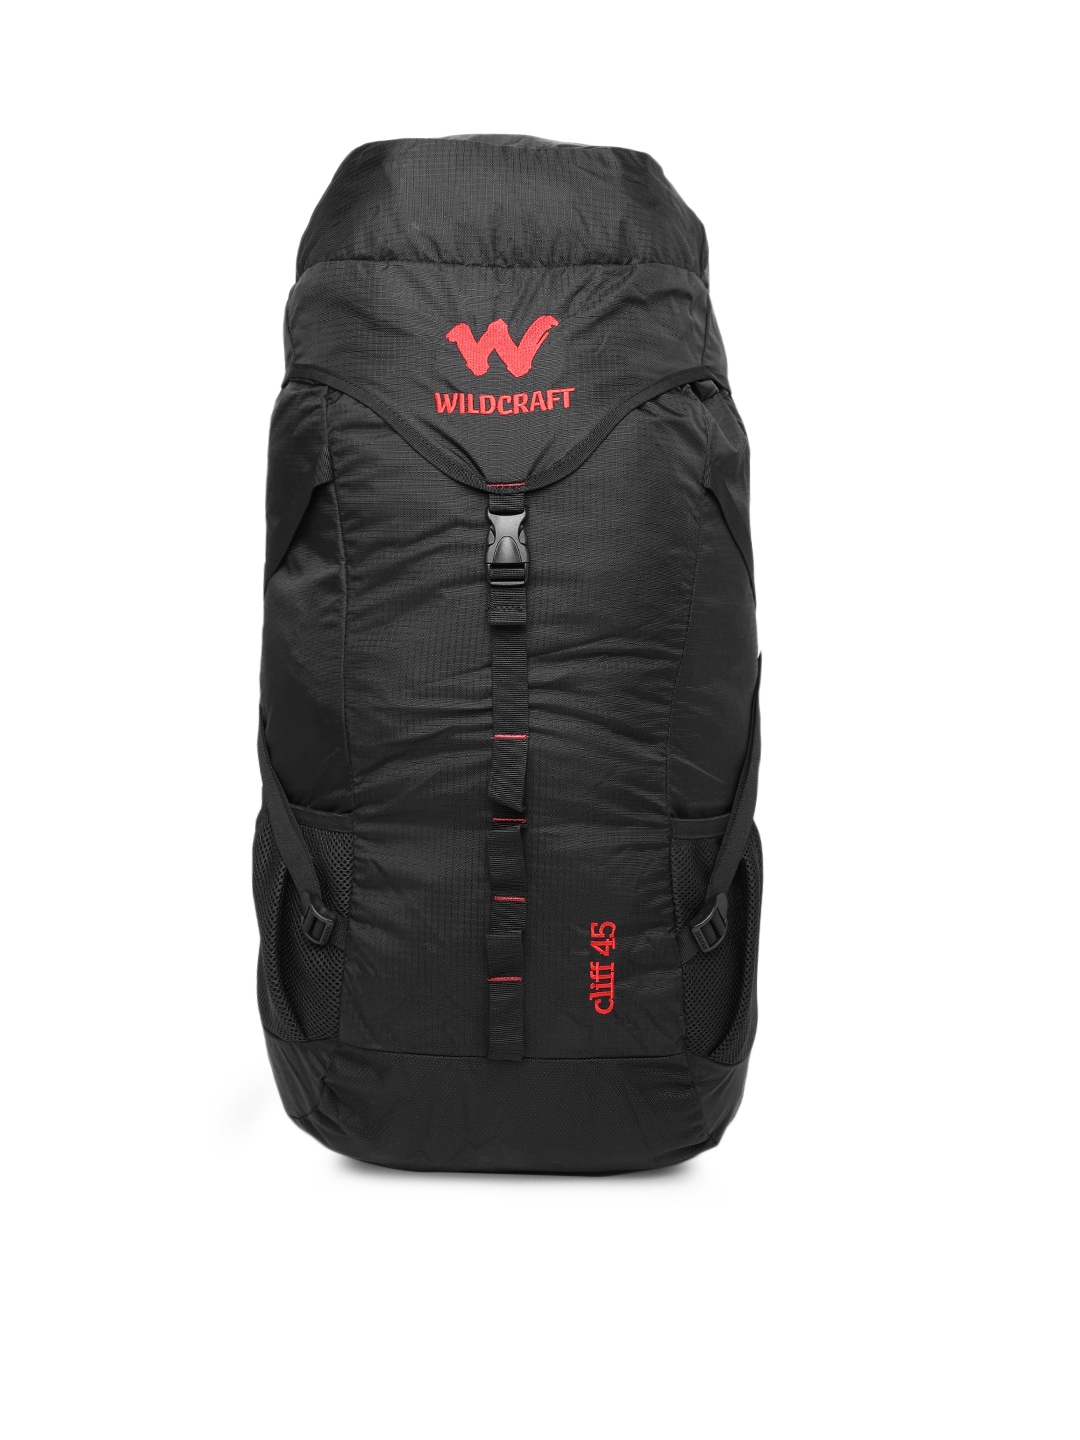 Wildcraft Cliff 45L Blue & Black Rucksack 🎒 Best Travelling Backpack under  2000 💸 ⚡️ Waterproof 🌧 ❓ - YouTube